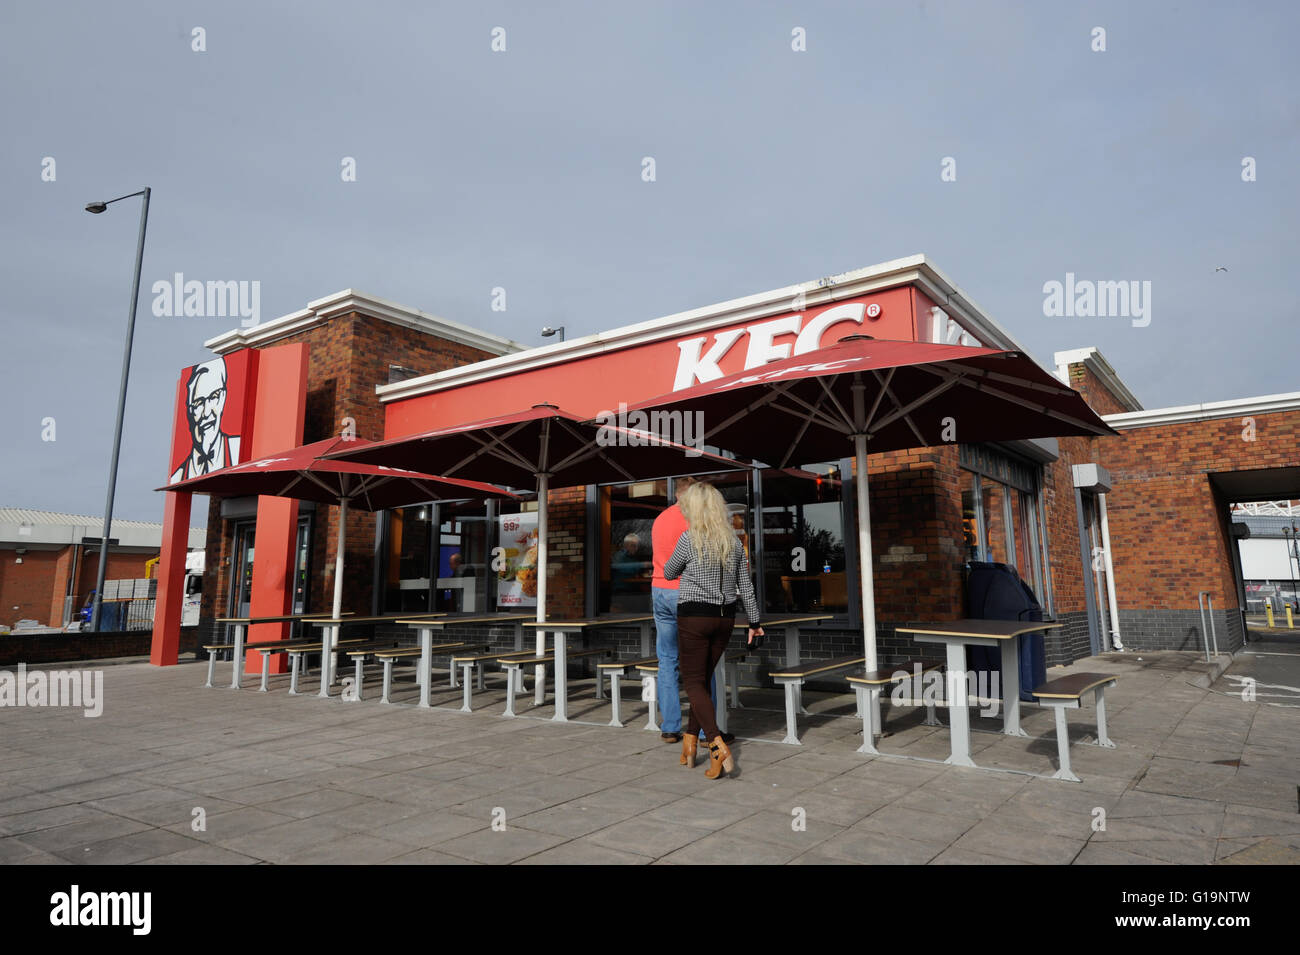 KFC, fast food restaurant,Kentucky Fried Chicken Stock Photo